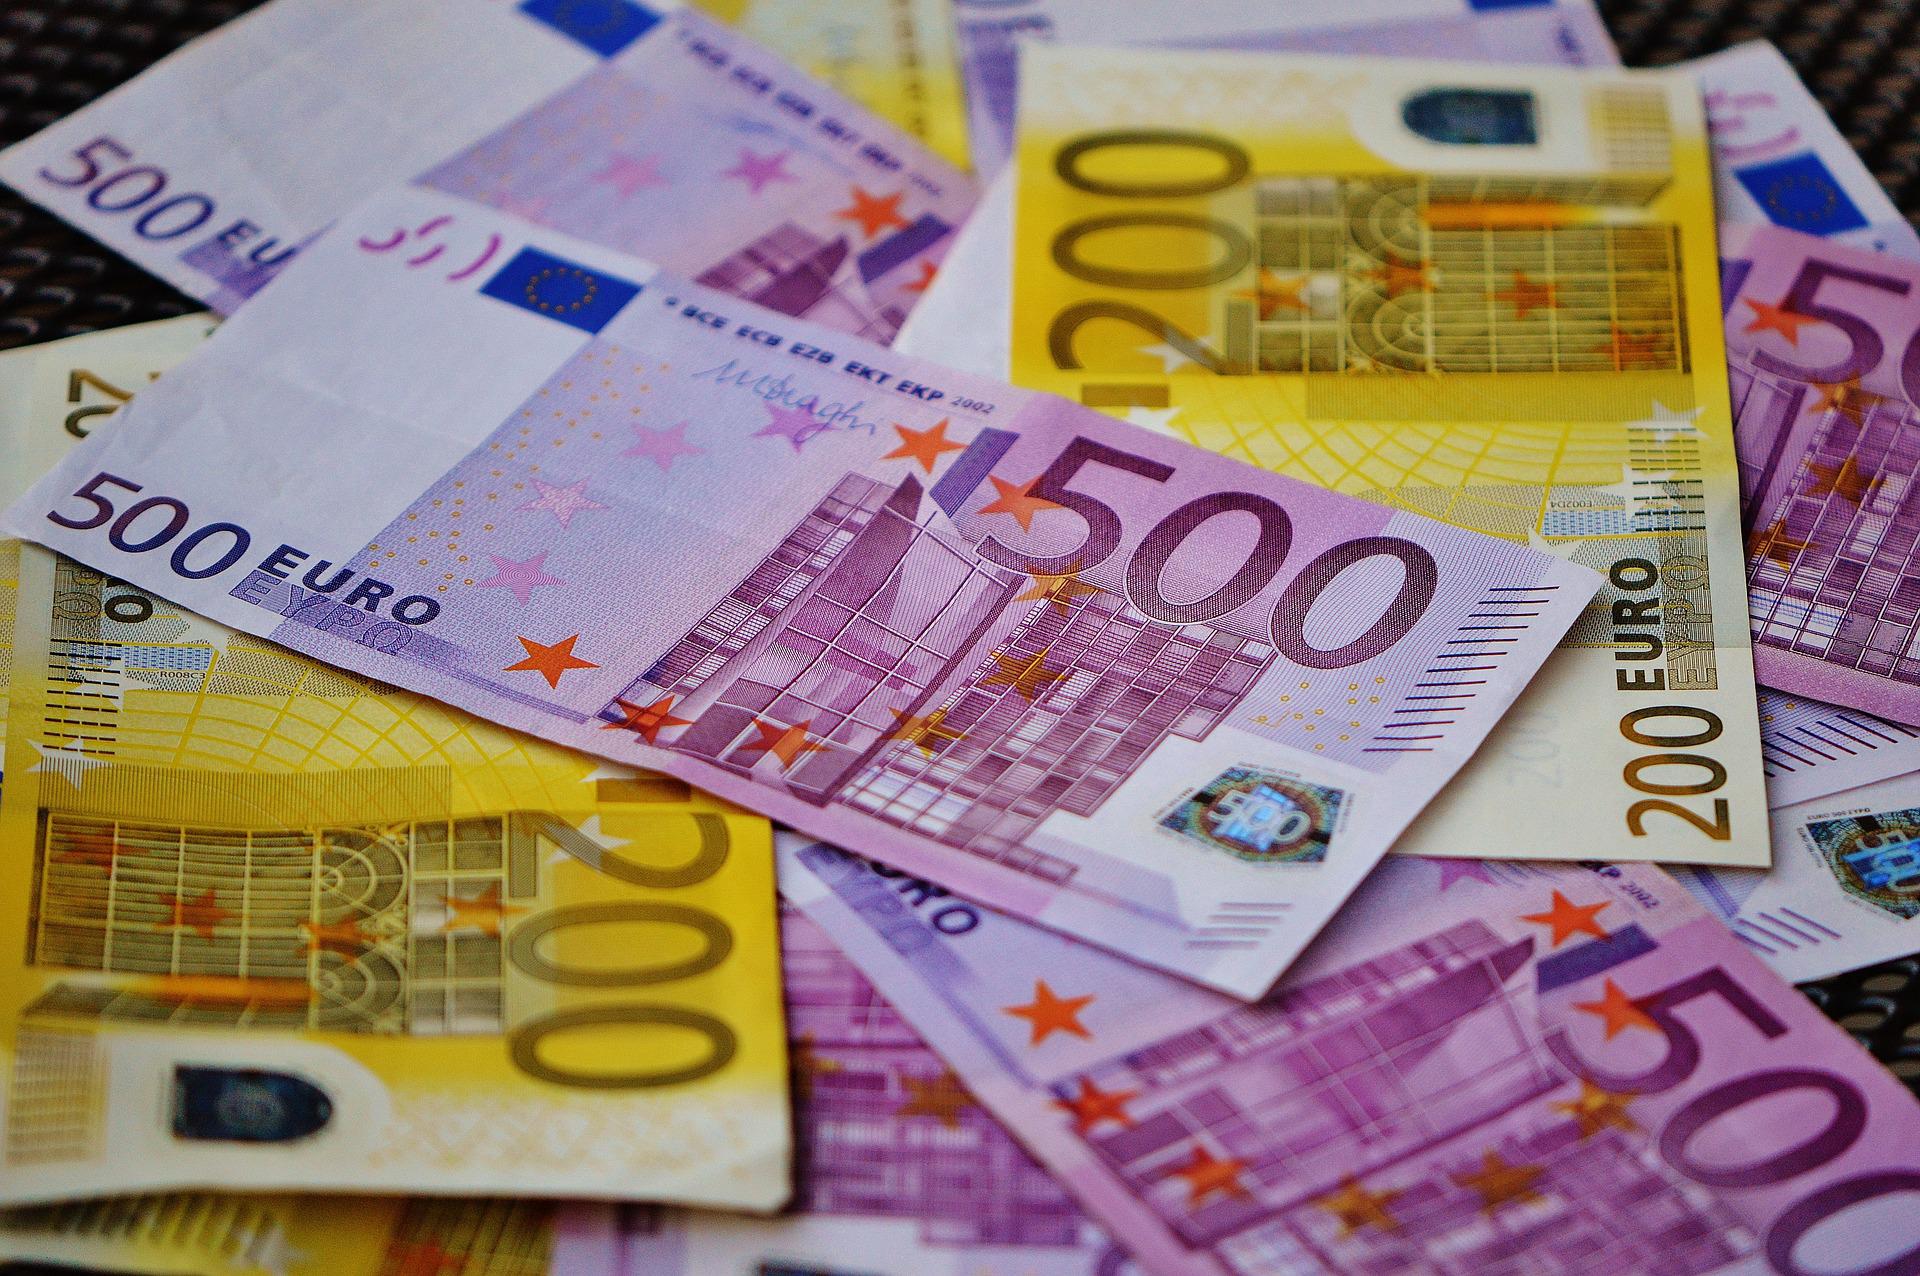 Engagement banking provider Backbase garners €120m at €2.5bn valuation